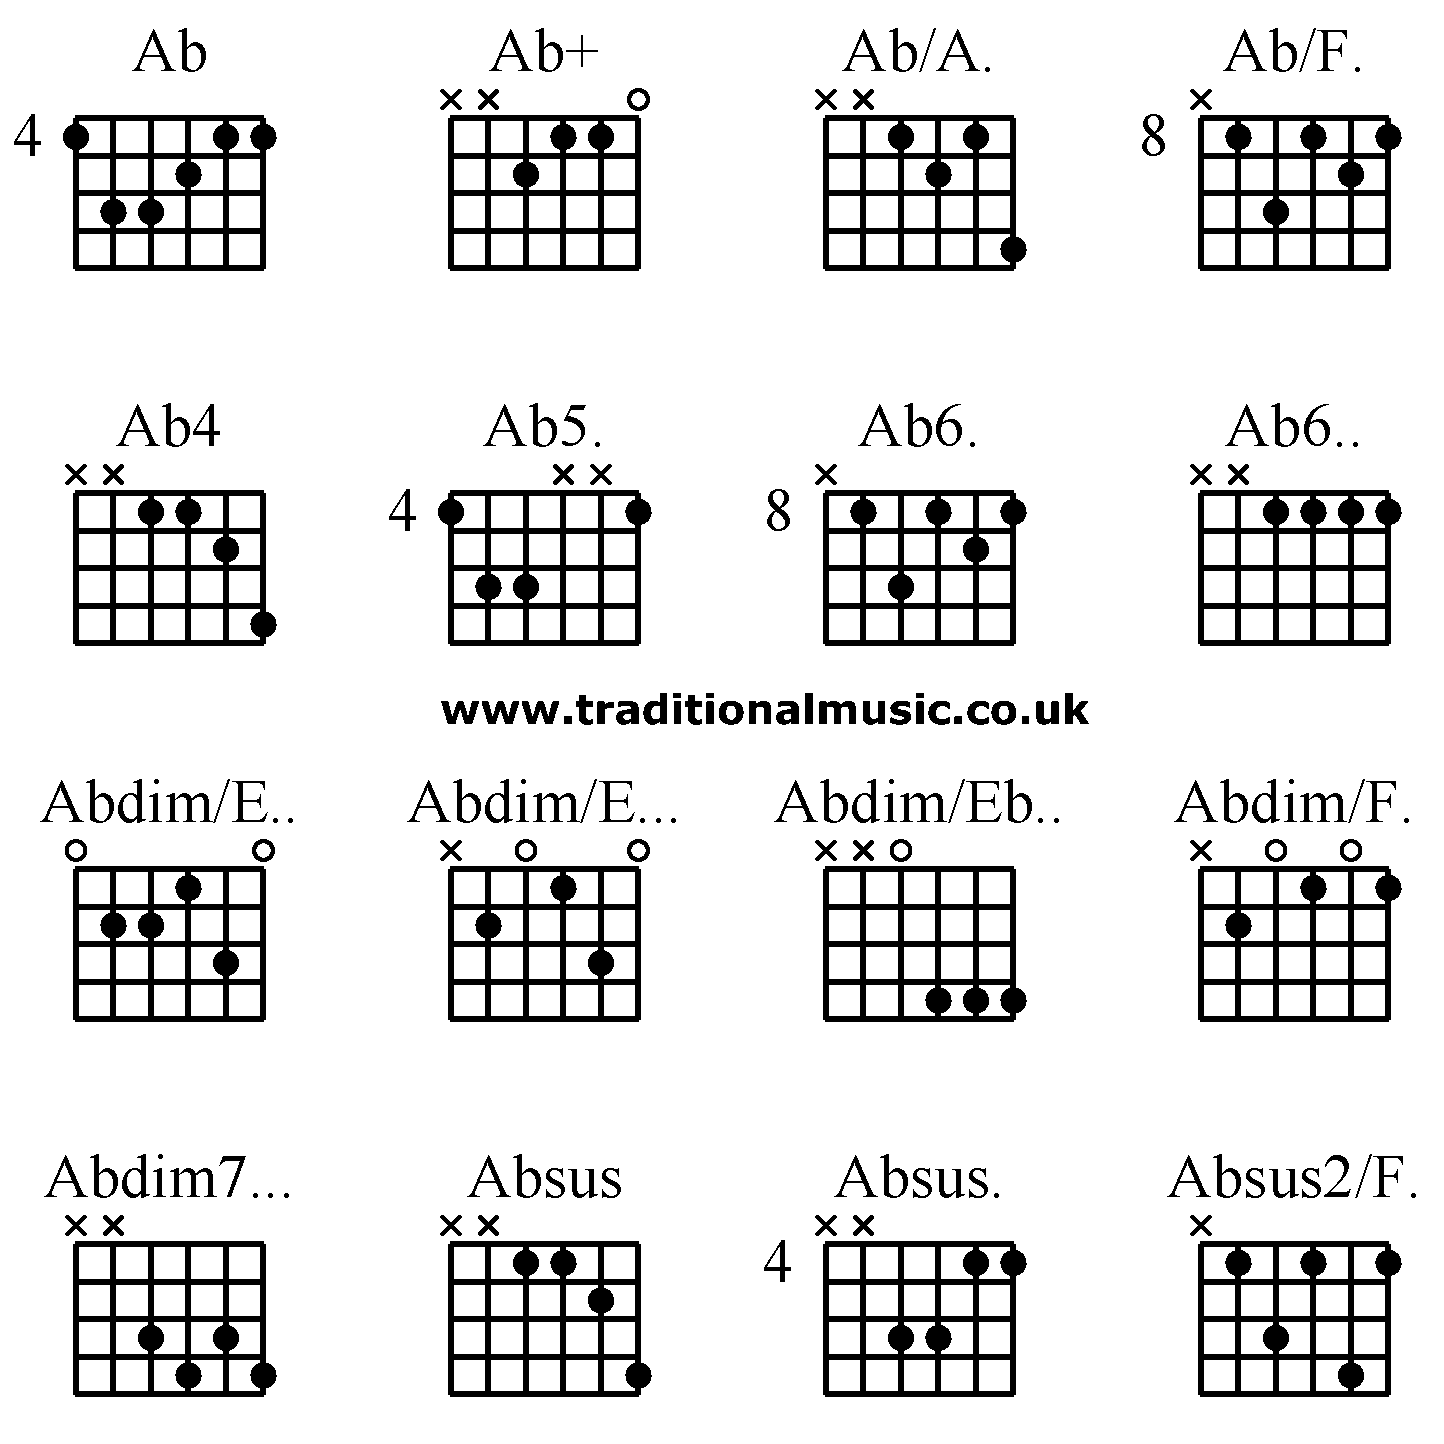 Advanced guitar chords:Ab Ab+ Ab/A. Ab/F , Ab4 Ab5. Ab6. Ab6., Abdim/E.. Abdim/E... Abdim/Eb.. Abdim/F. , Abdim7... Absus Absus. Absus2/F